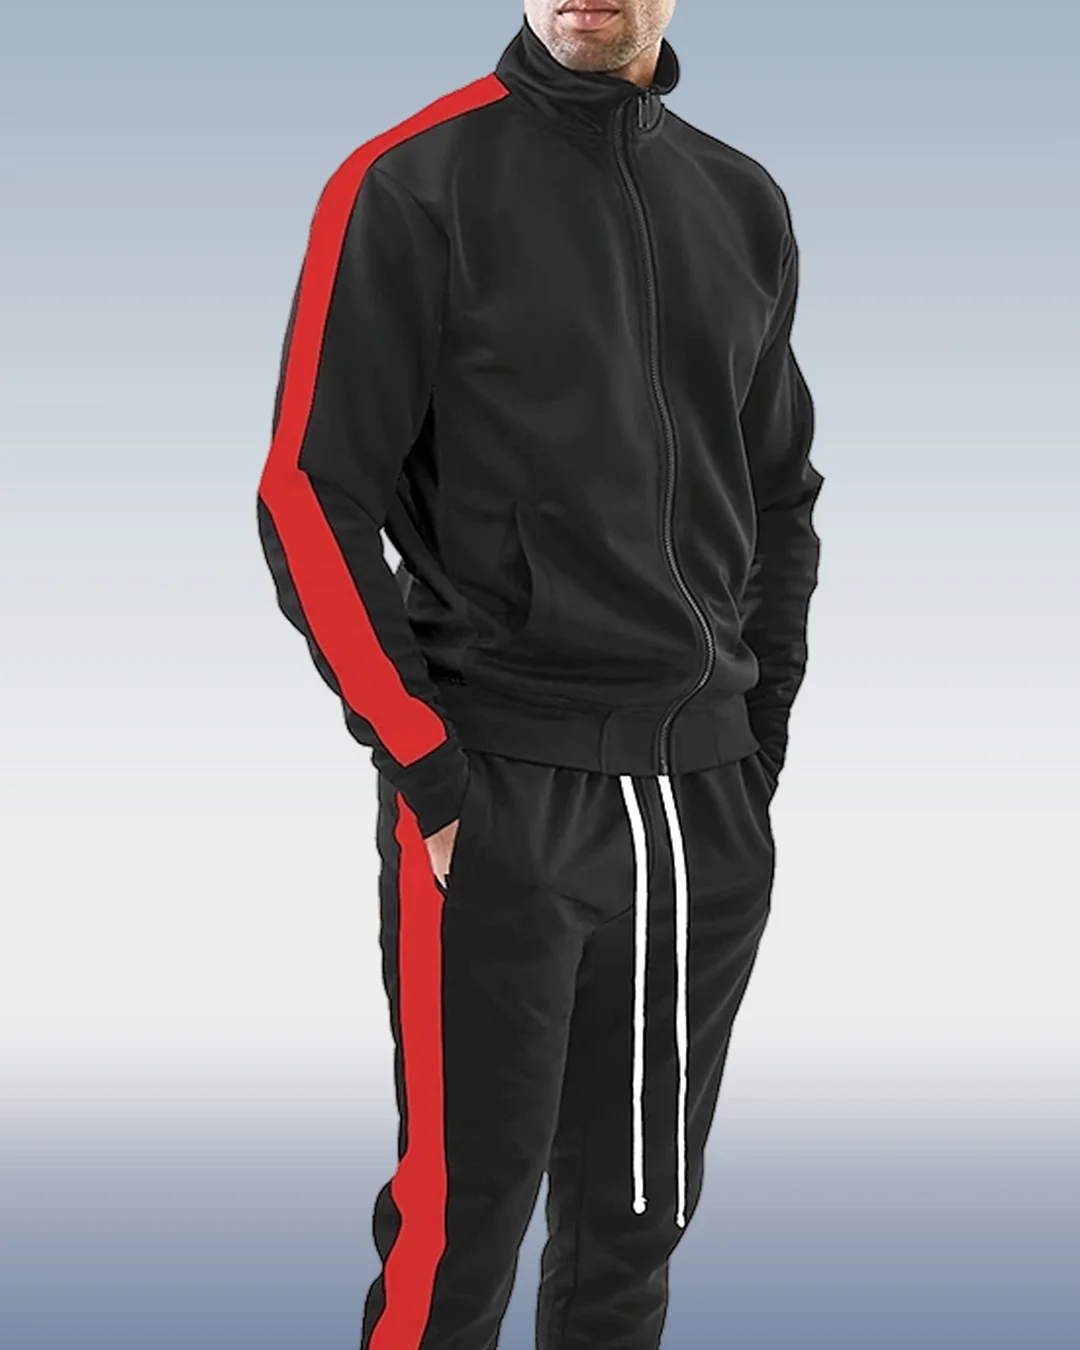 Men's black and red color block jogging sportswear